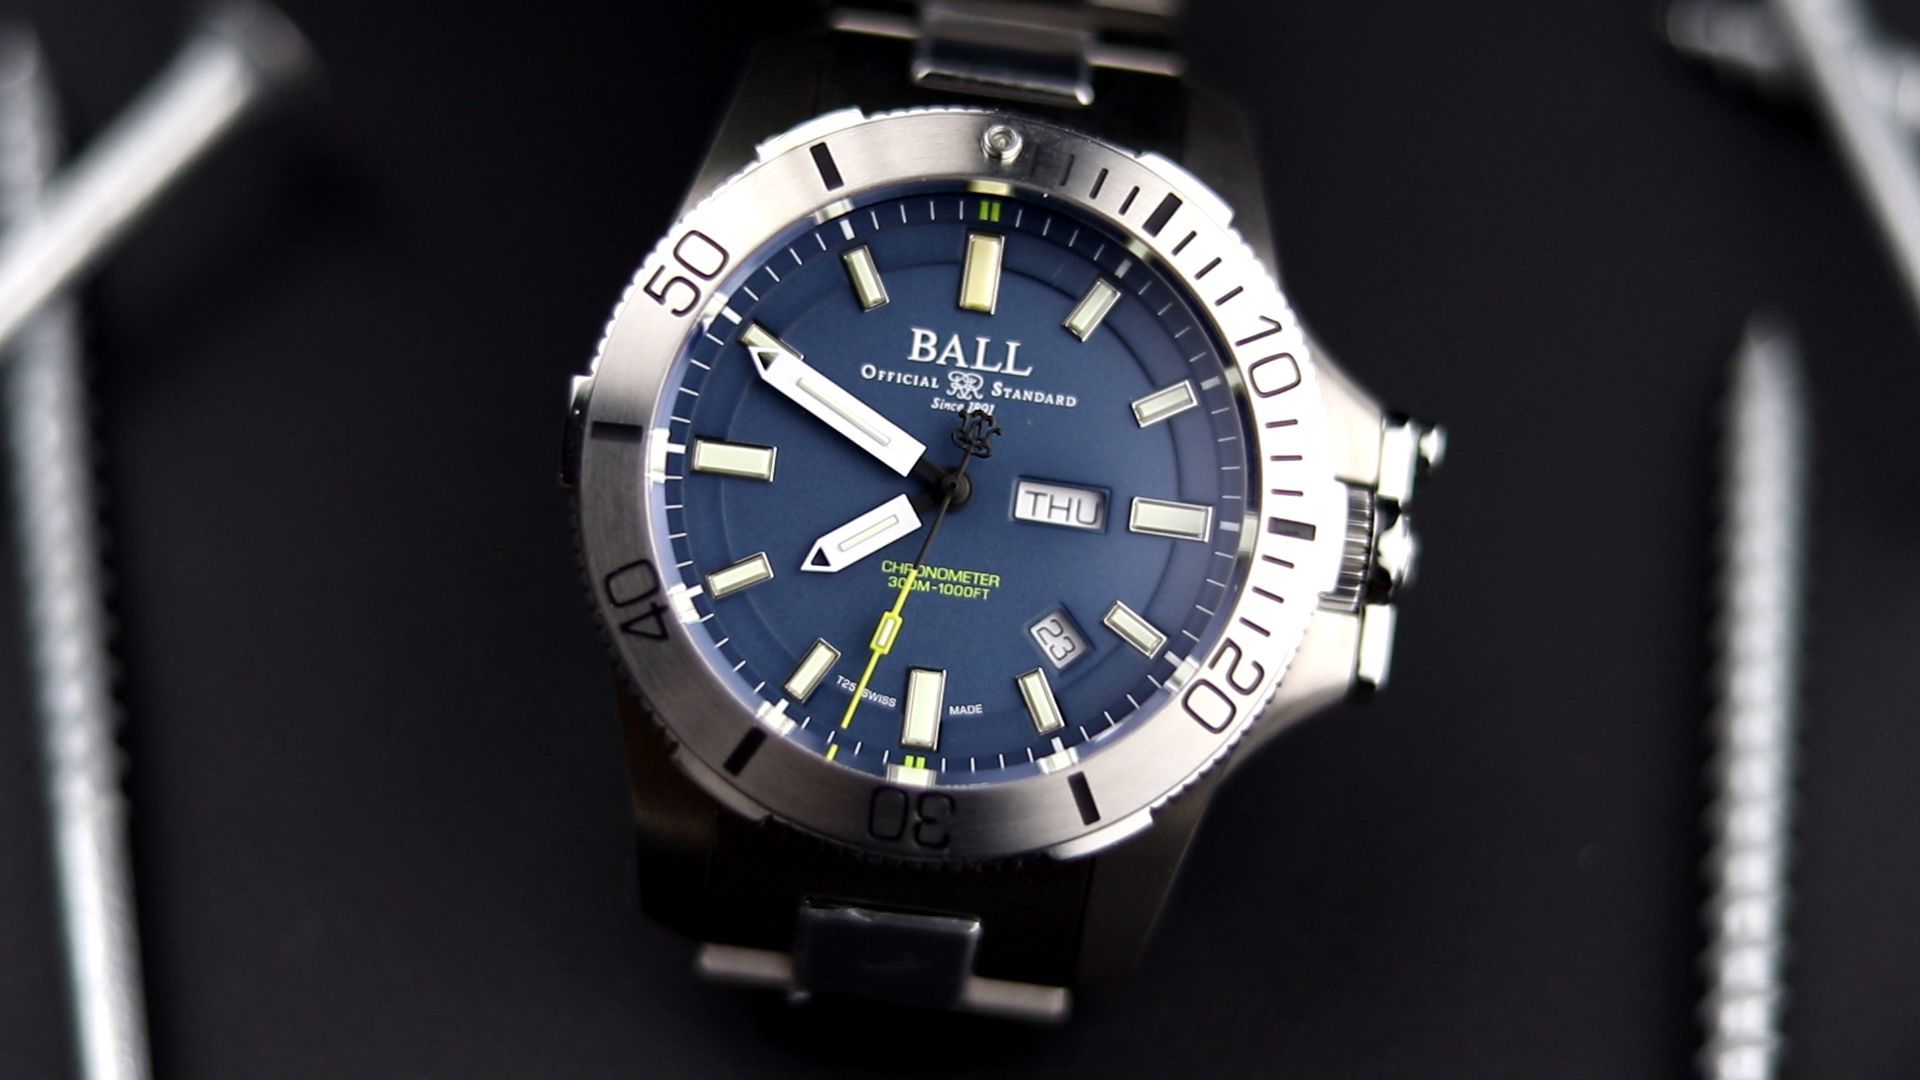 Ball Engineer Hydrocarbon Submarine Warfare Watch Review 2019